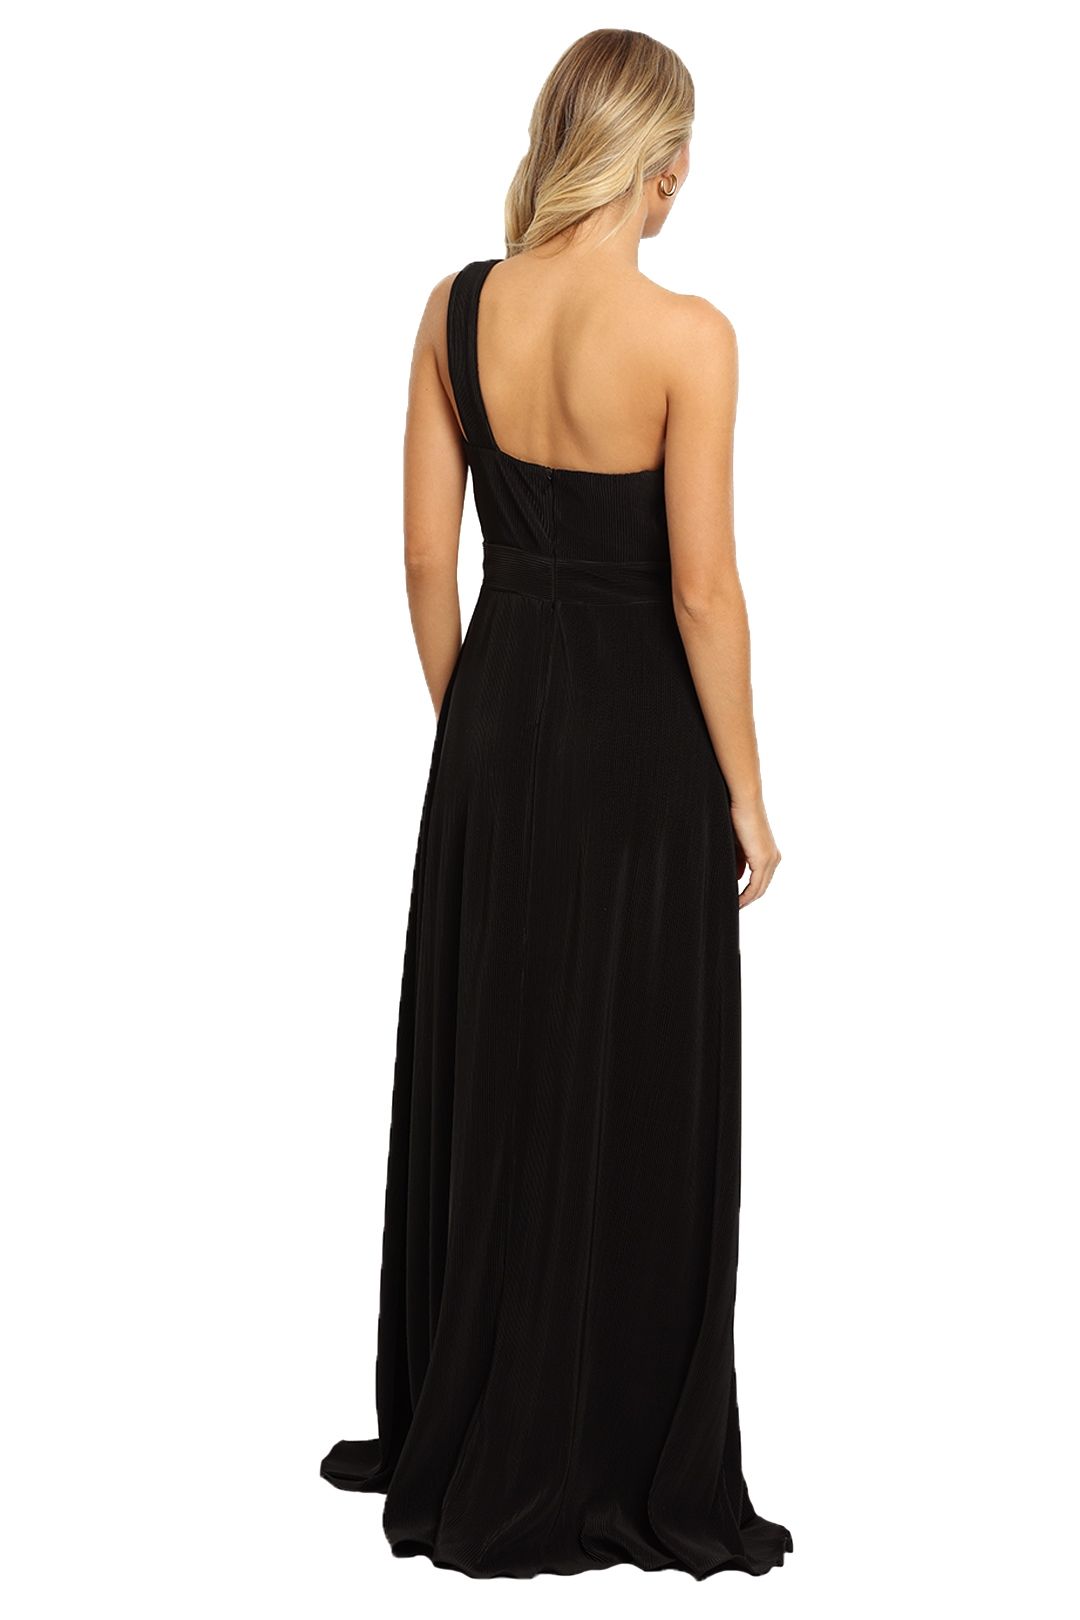 Langhem Dior Gown Black floor length